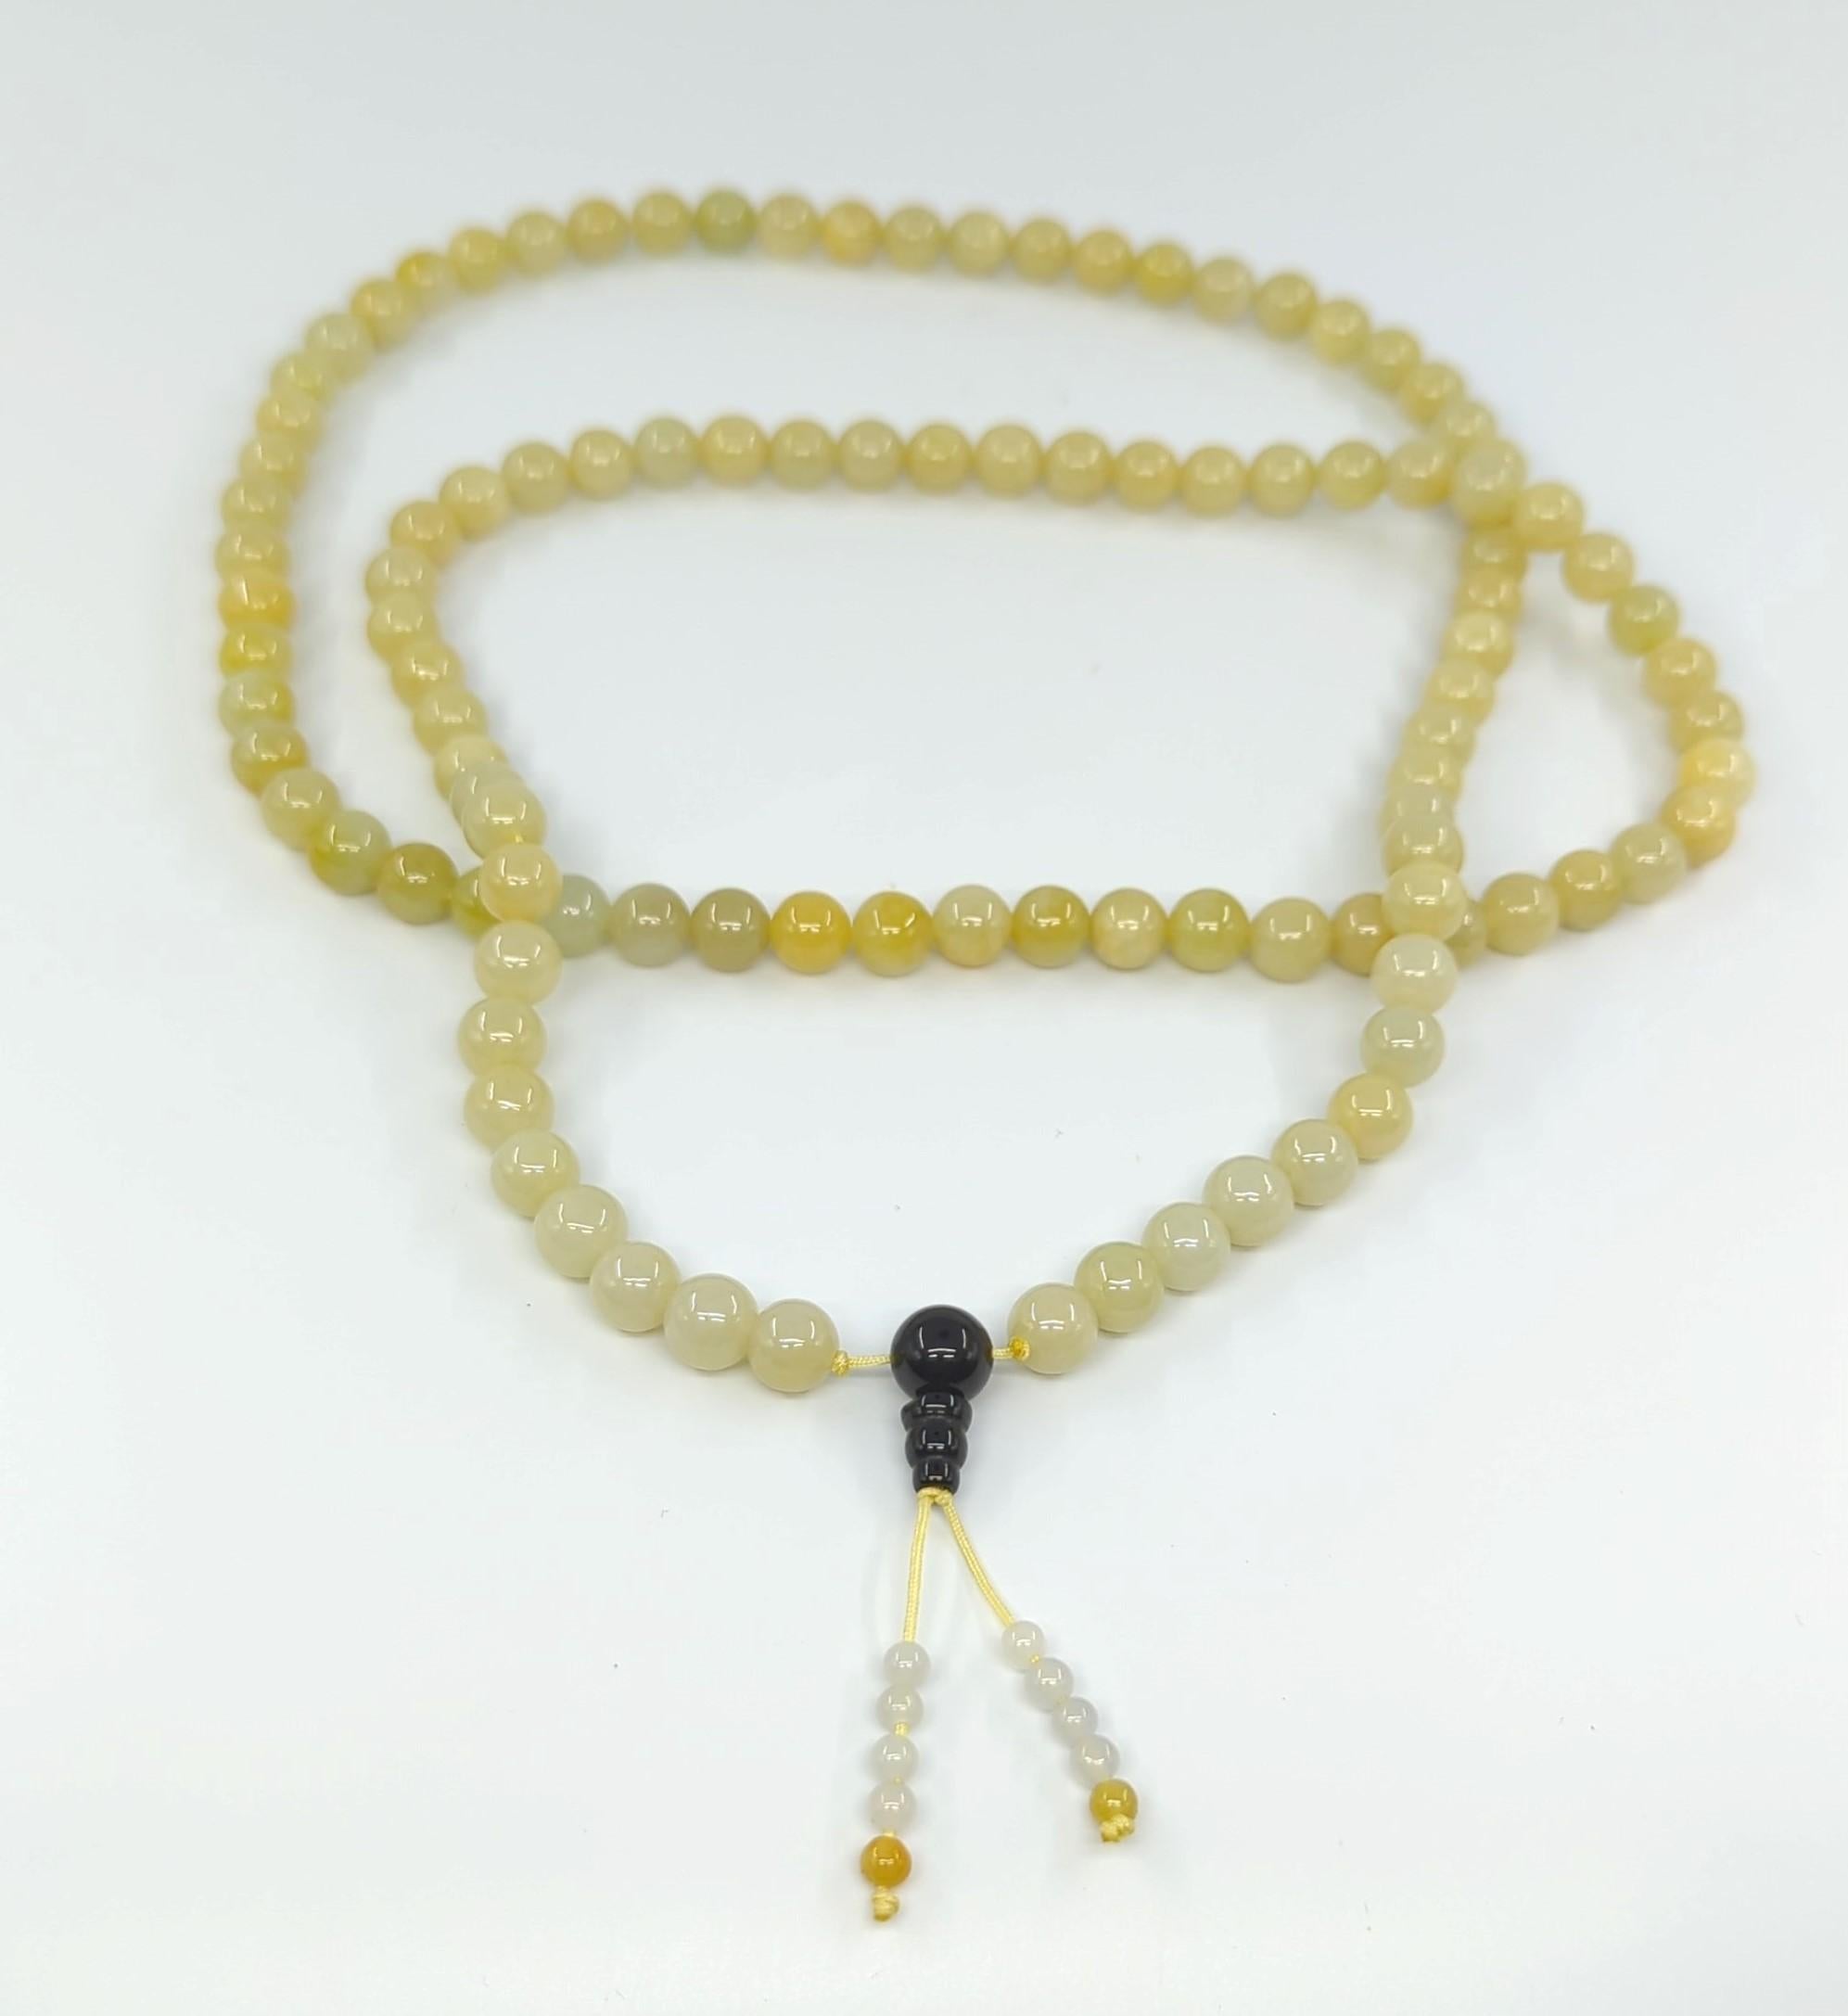 Artisan Exquisite Chinese Yellow Jadeite Buddhist Meditation Beads 108pc A-Grade 40